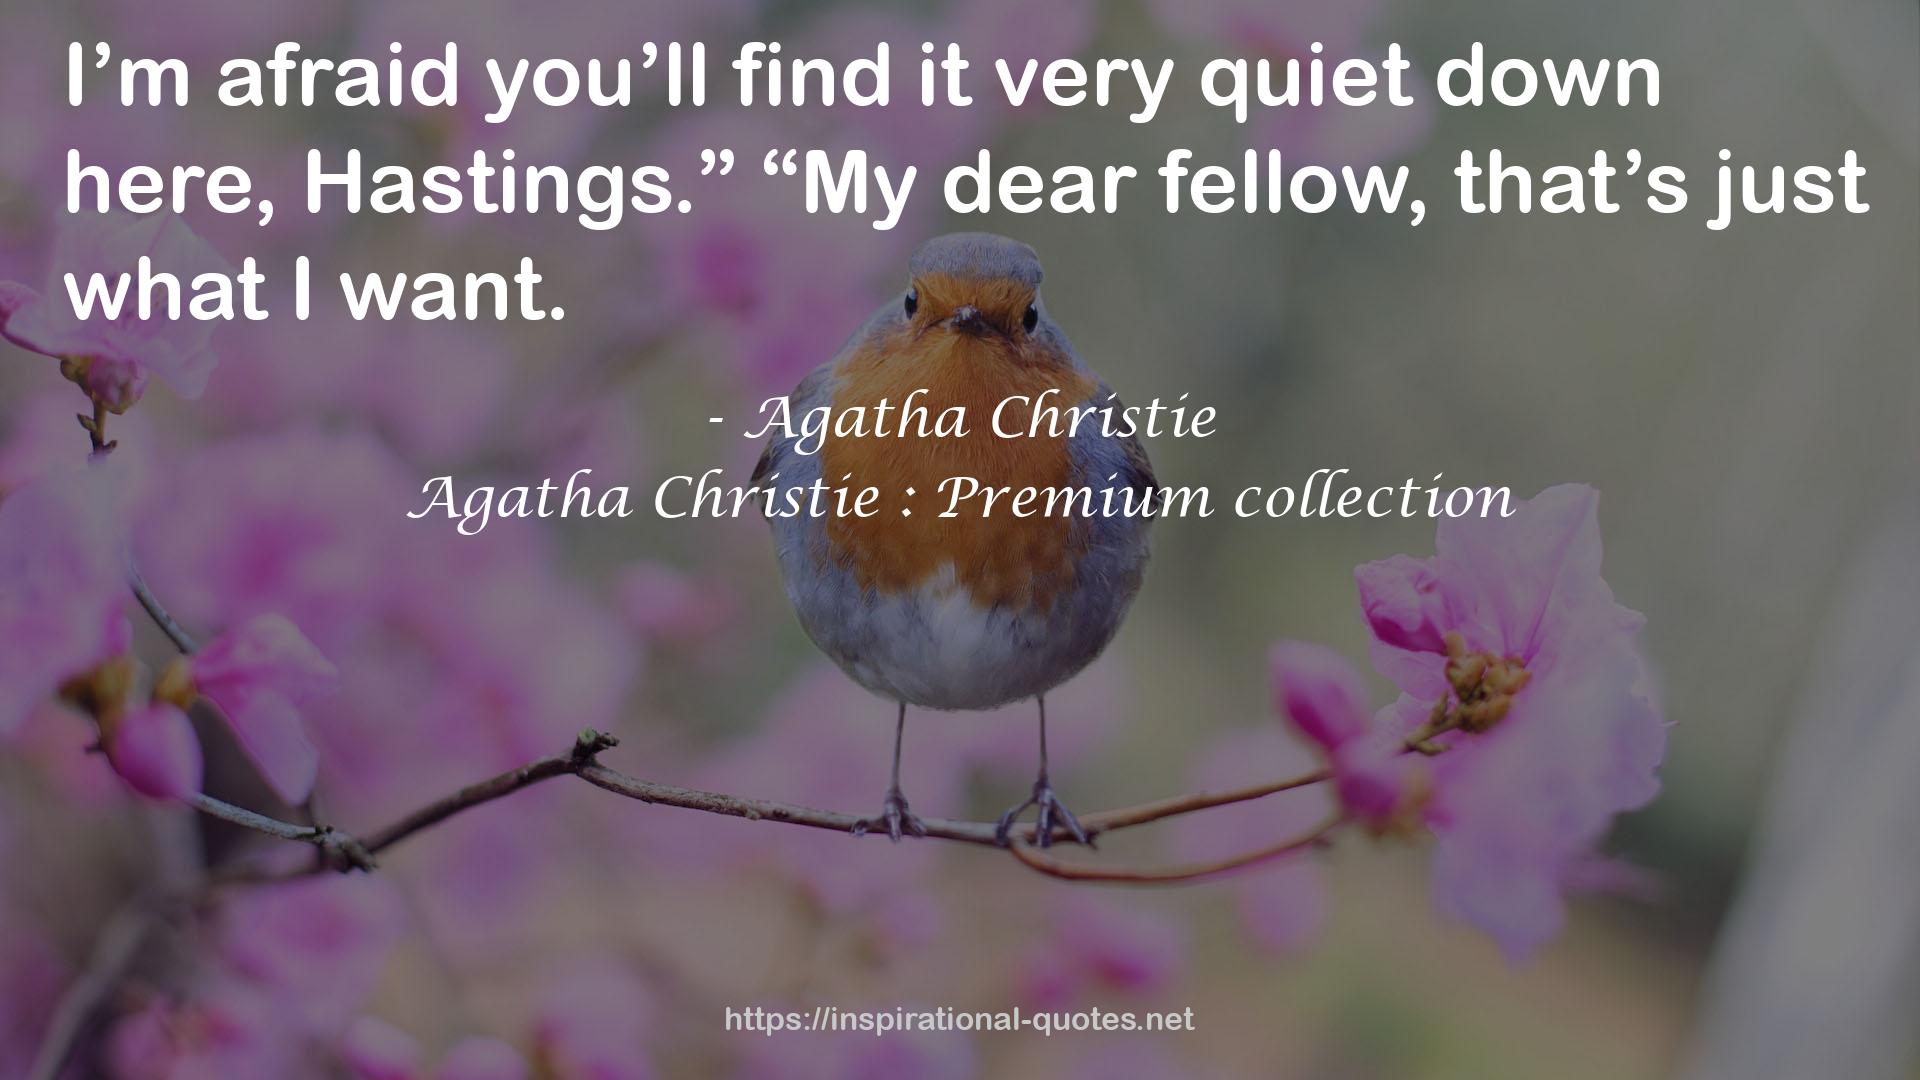 Agatha Christie : Premium collection QUOTES